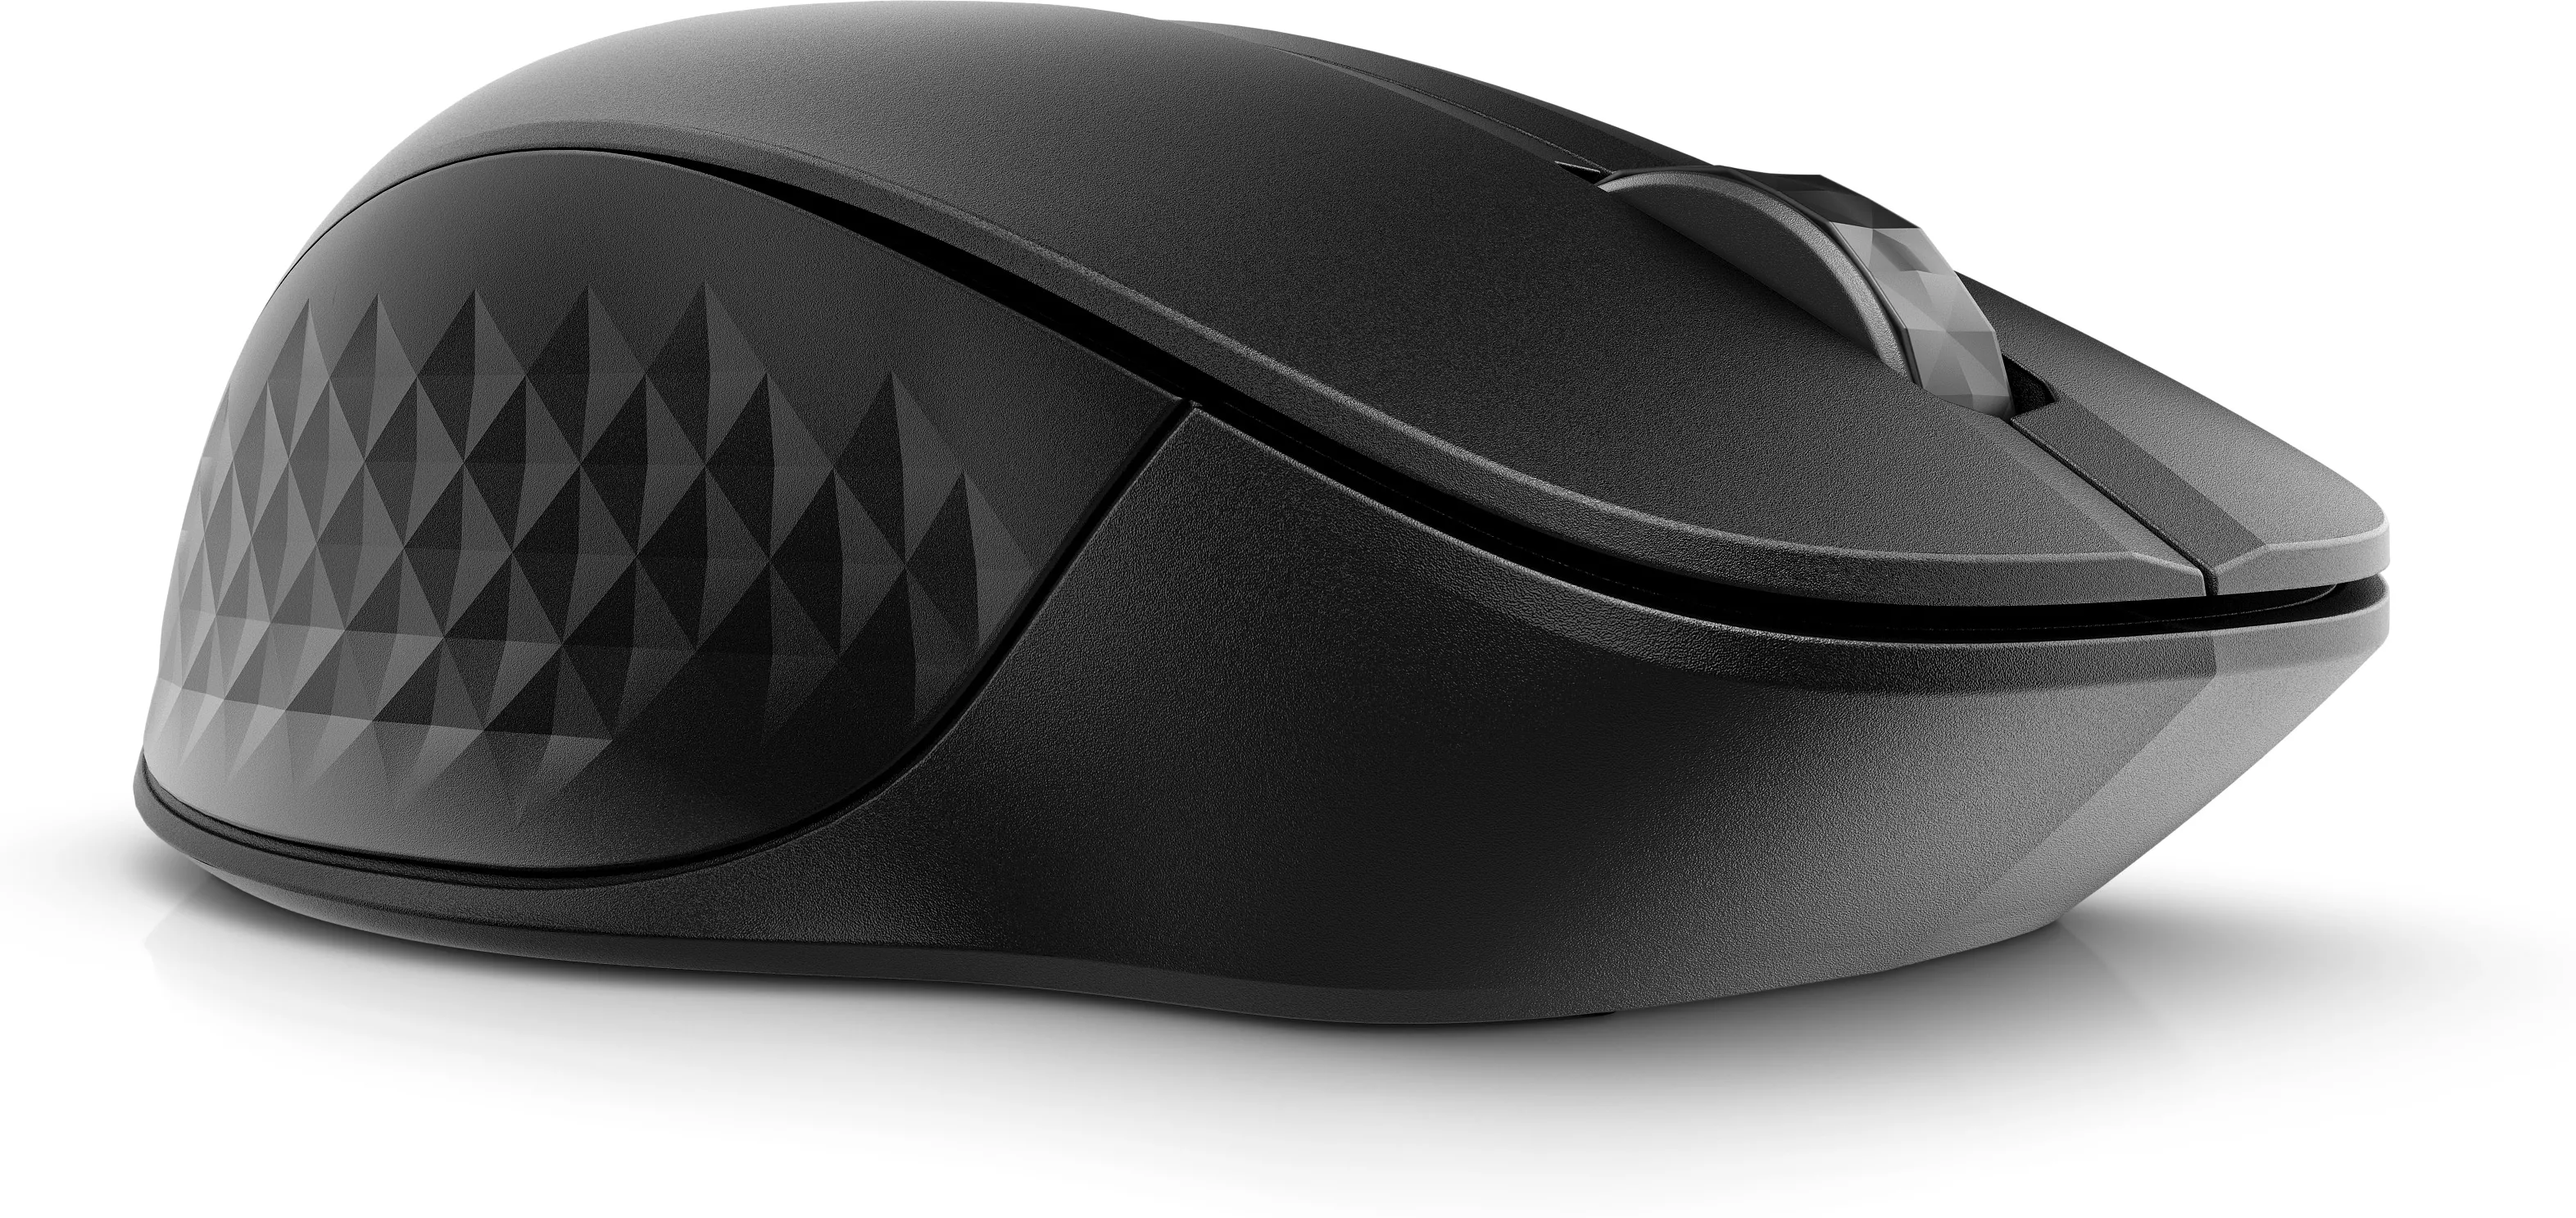 Vente HP 430 Multi-Device Wireless Mouse HP au meilleur prix - visuel 4